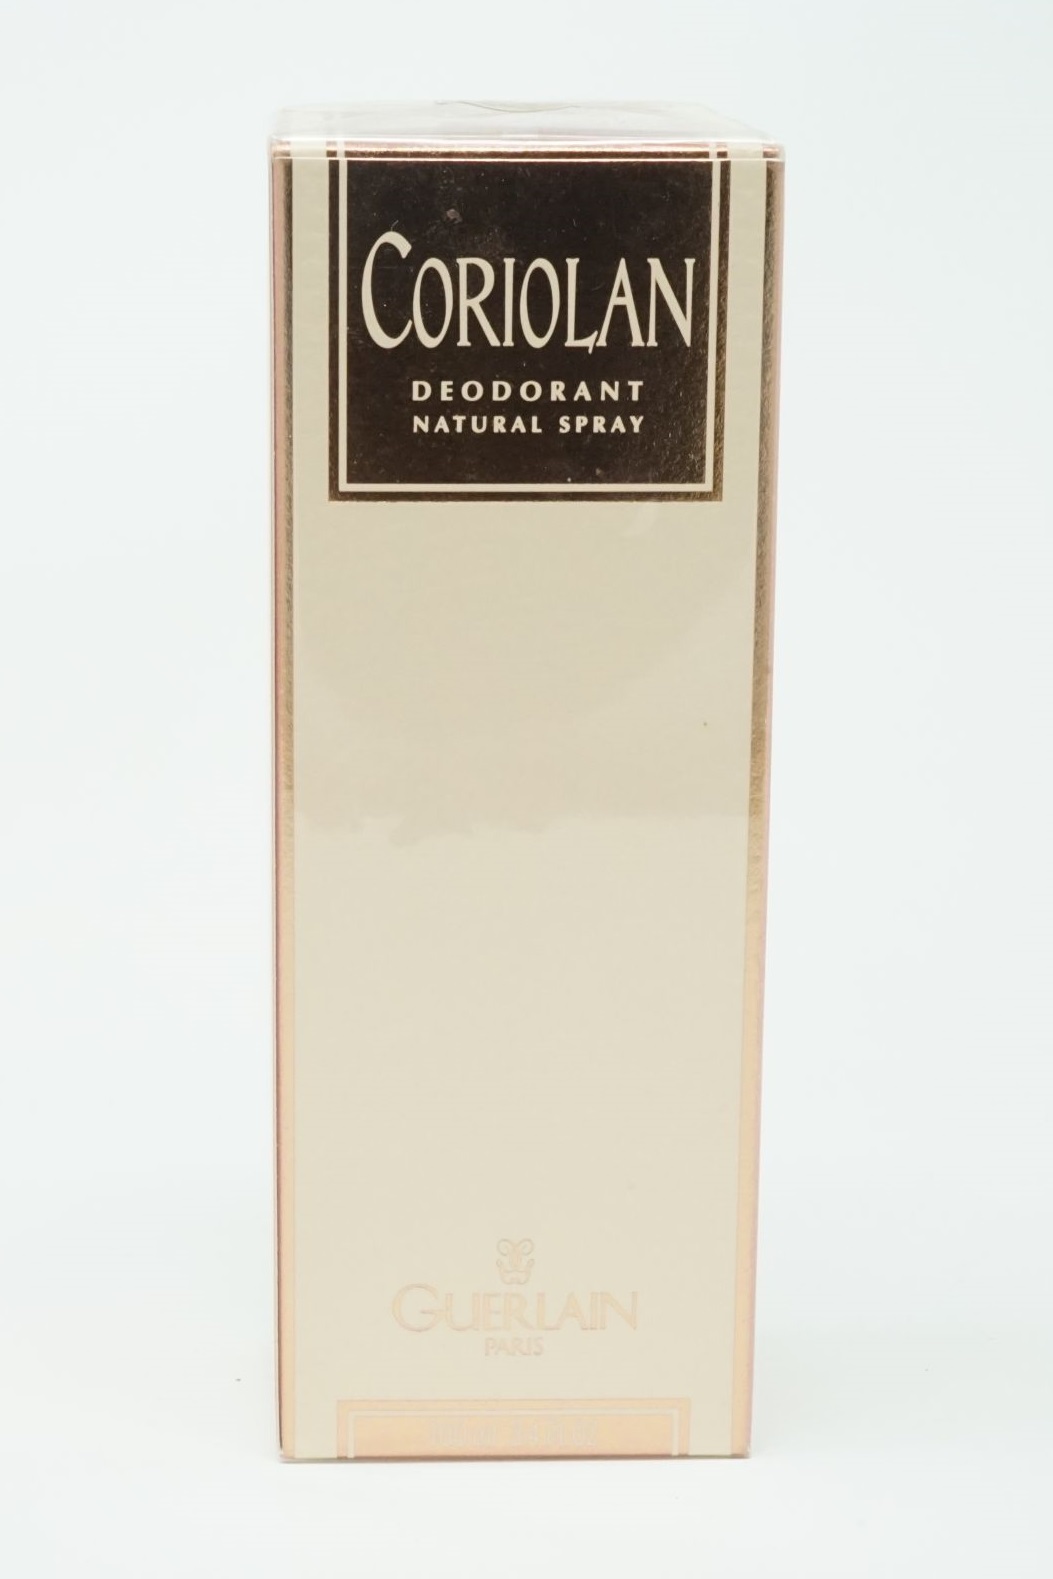 Guerlain Goriolan Deodorant Spray 100 ml